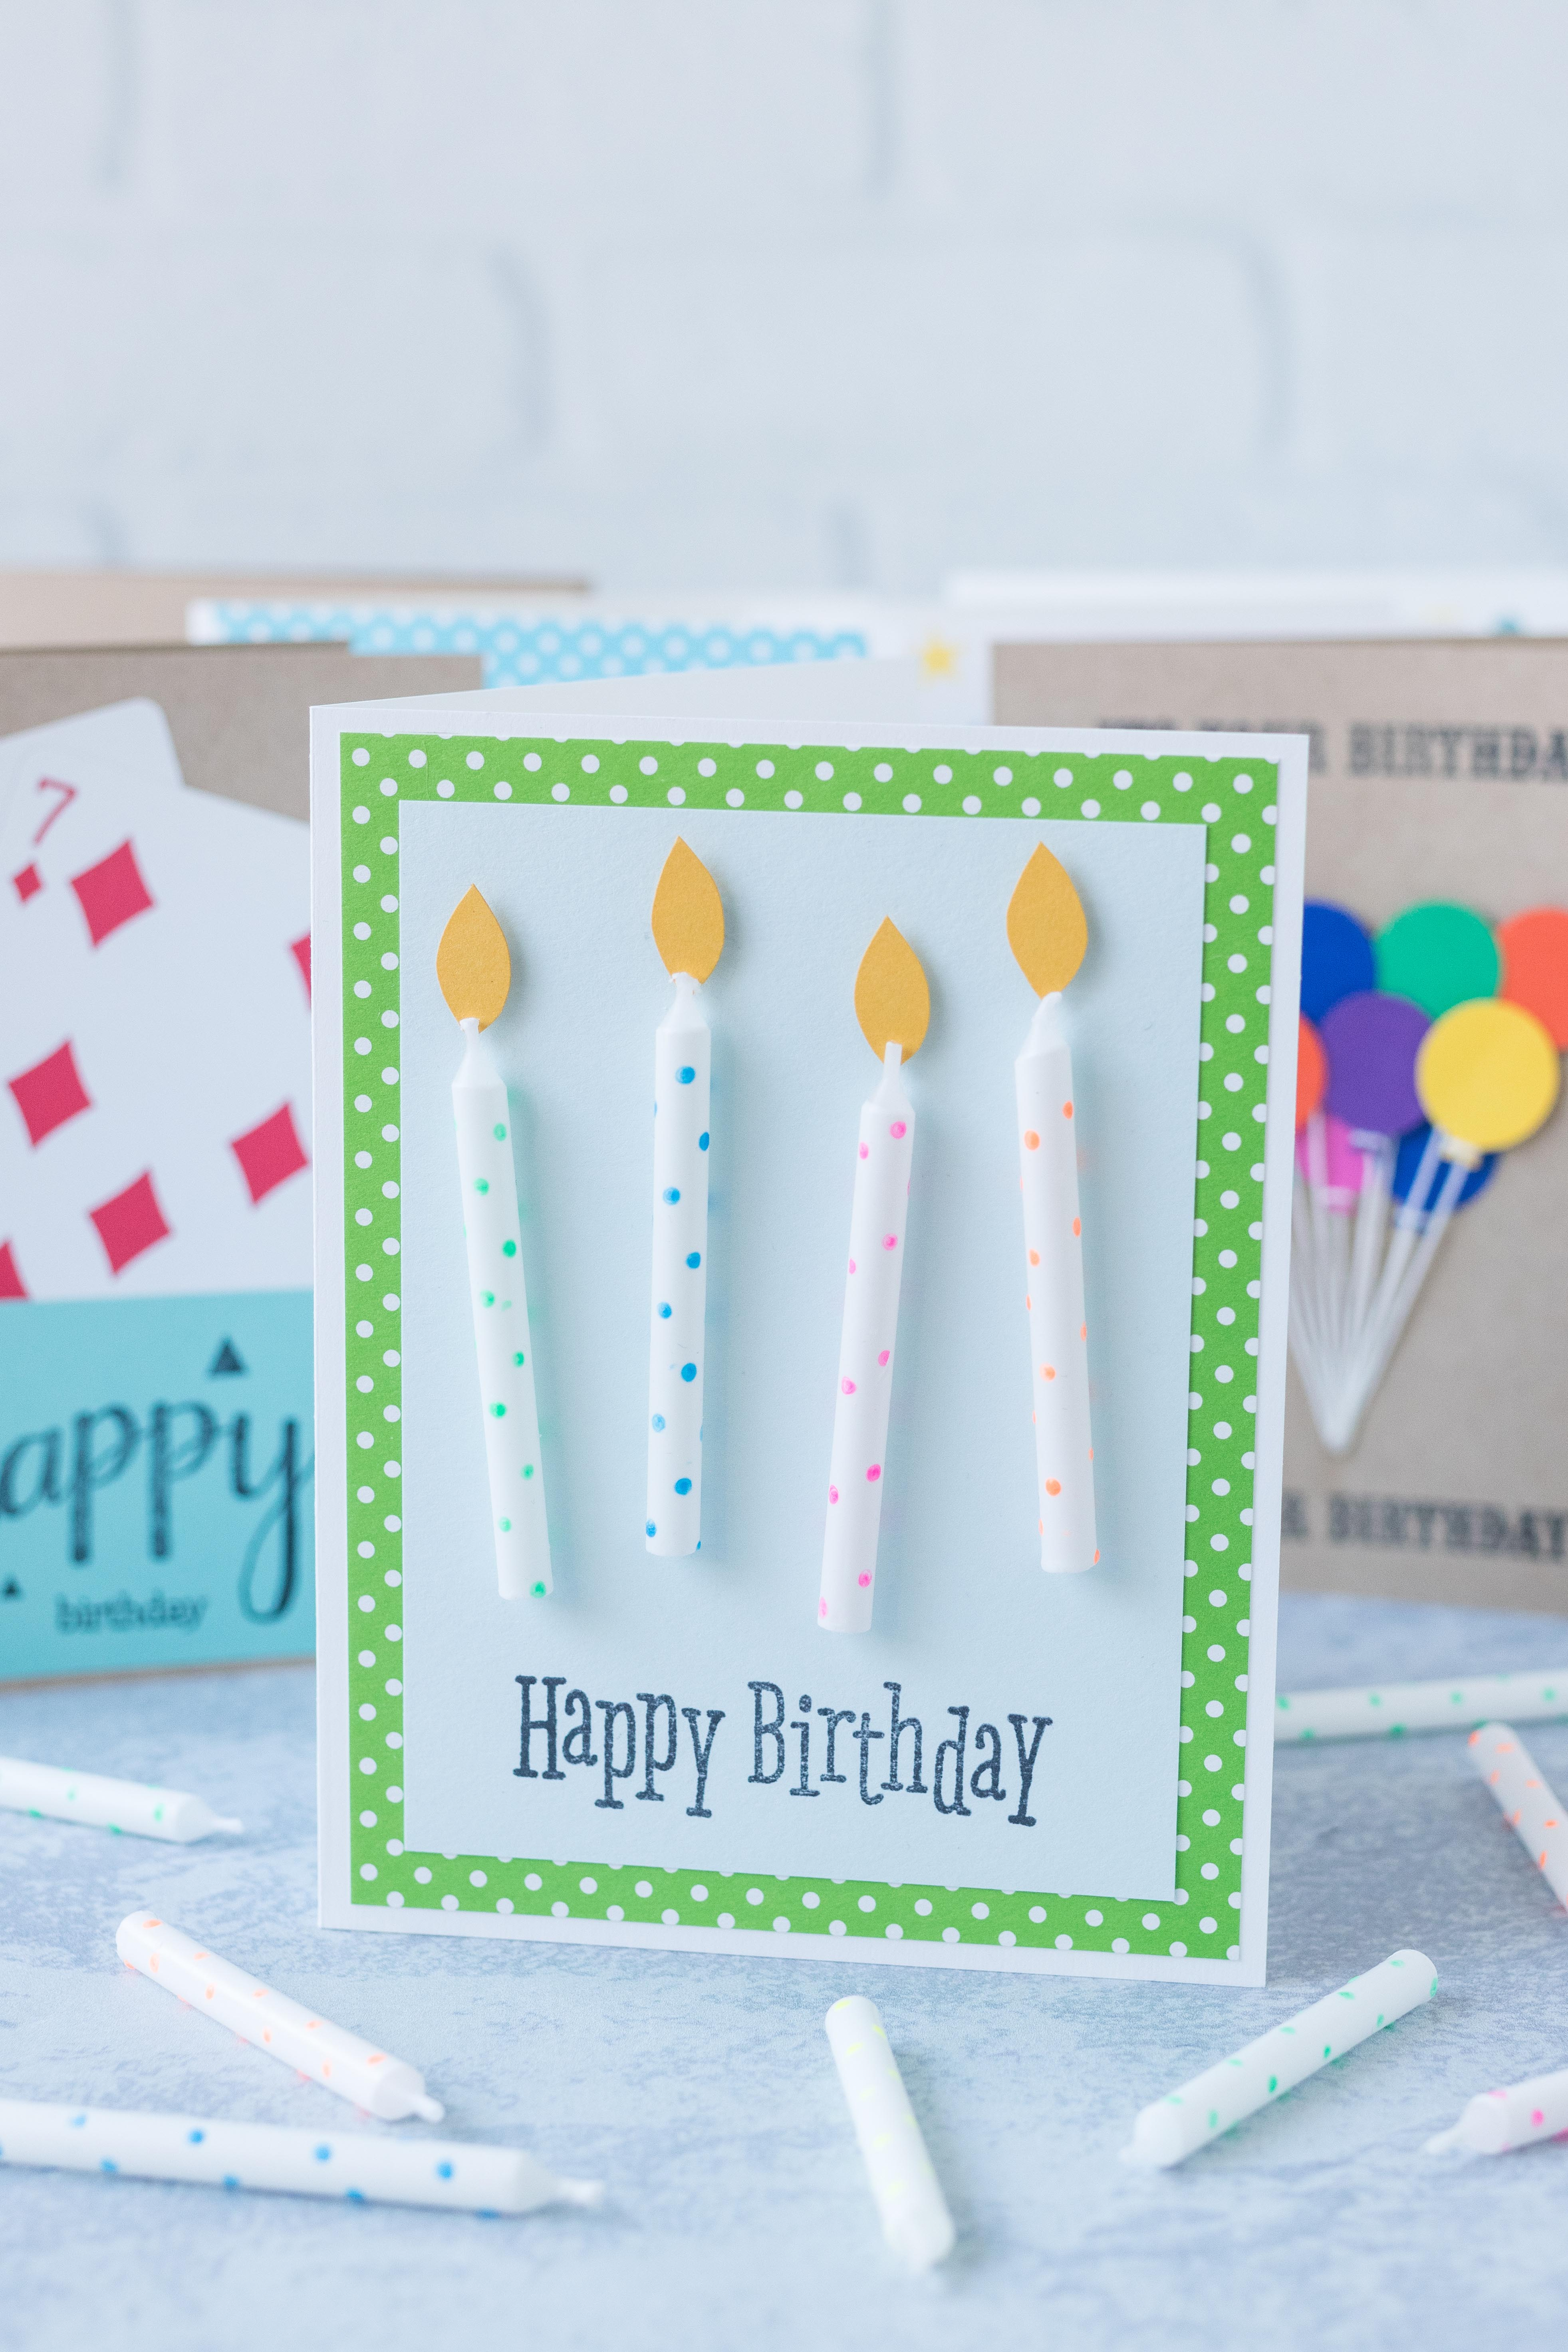 Happy Birthday Card Idea 10 Simple Diy Birthday Cards Rose Clearfield